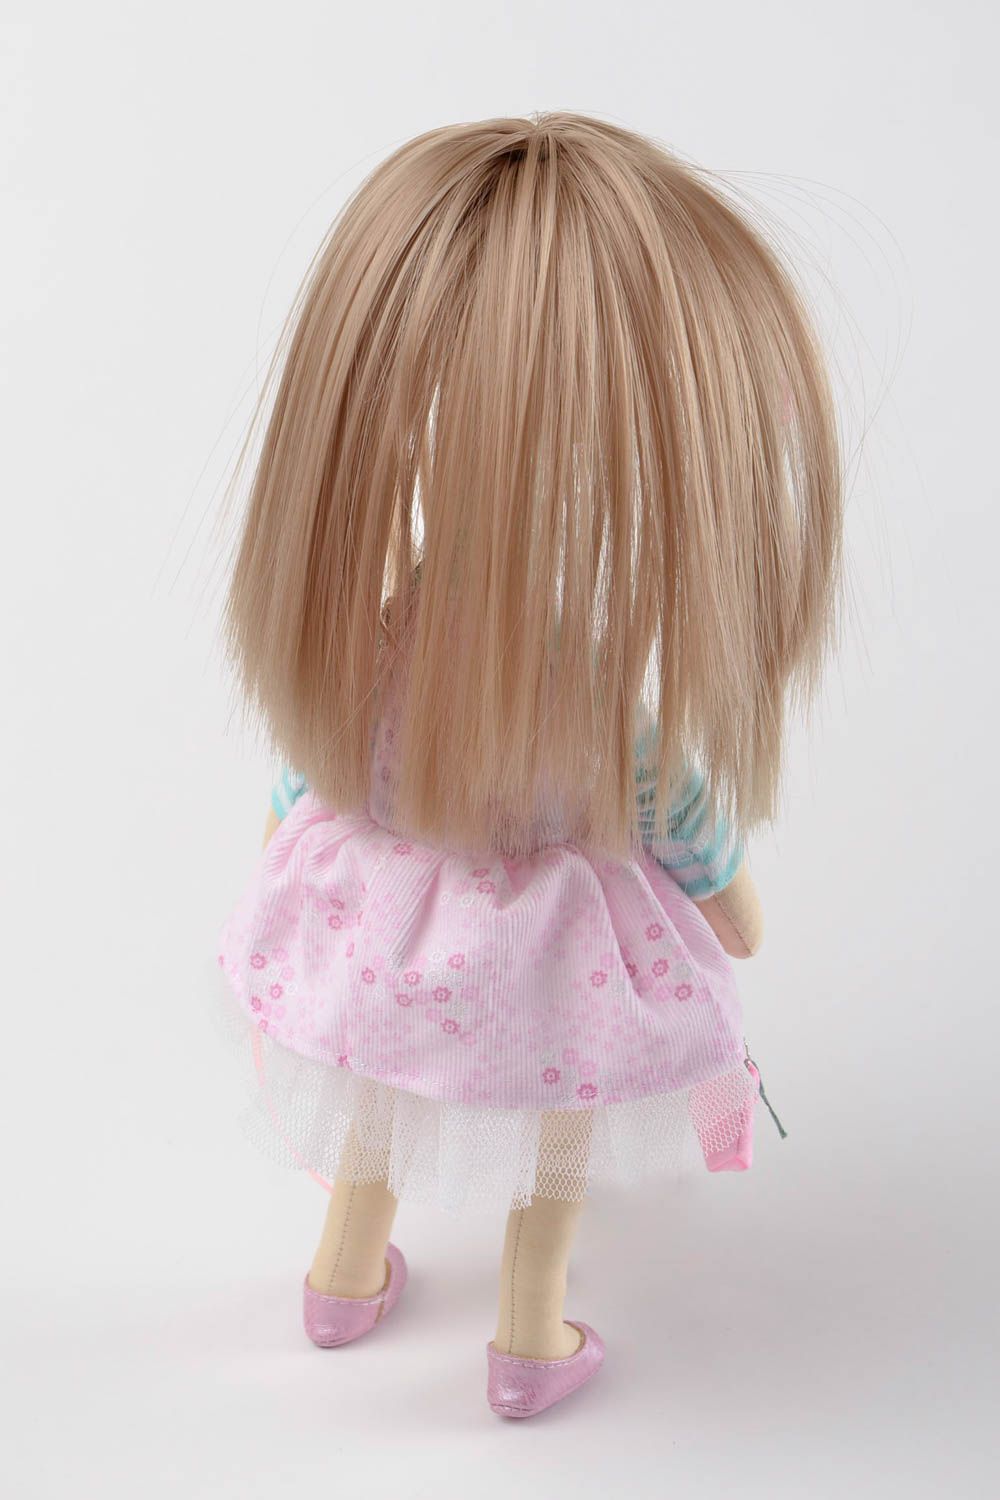 Handmade soft toy designer textile doll for girls stylish interior decoration photo 5